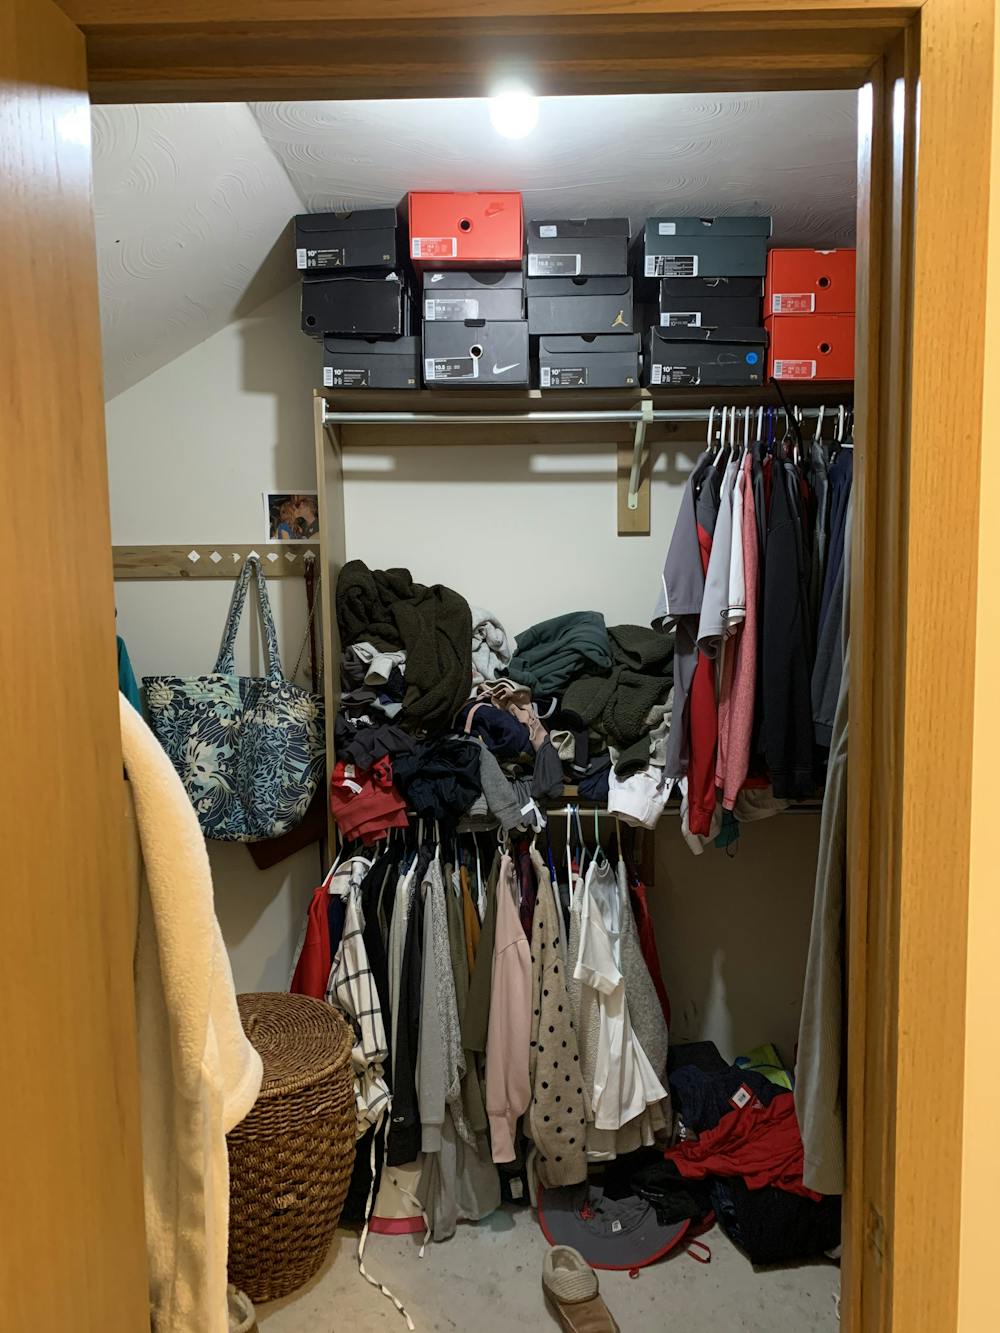 SMIRLY Hanging Closet Organizer and Storage Shelves - Wardrobe Clothes  Organizer for Closet, Hanging Shelves for Closet Organization and Storage